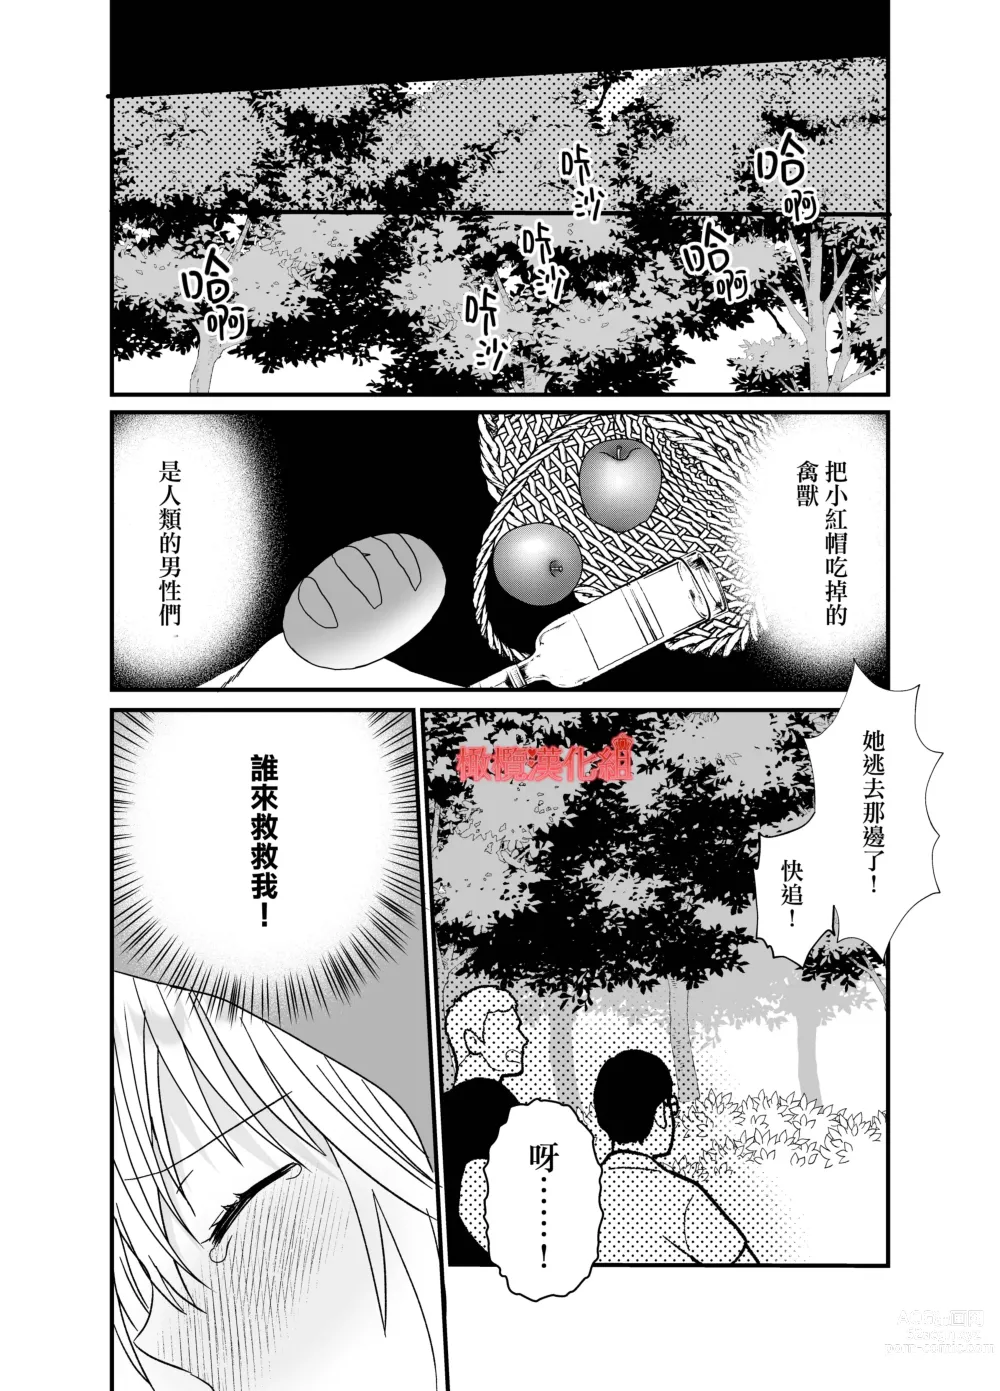 Page 14 of doujinshi 转生小红帽被狼人疯狂疼爱